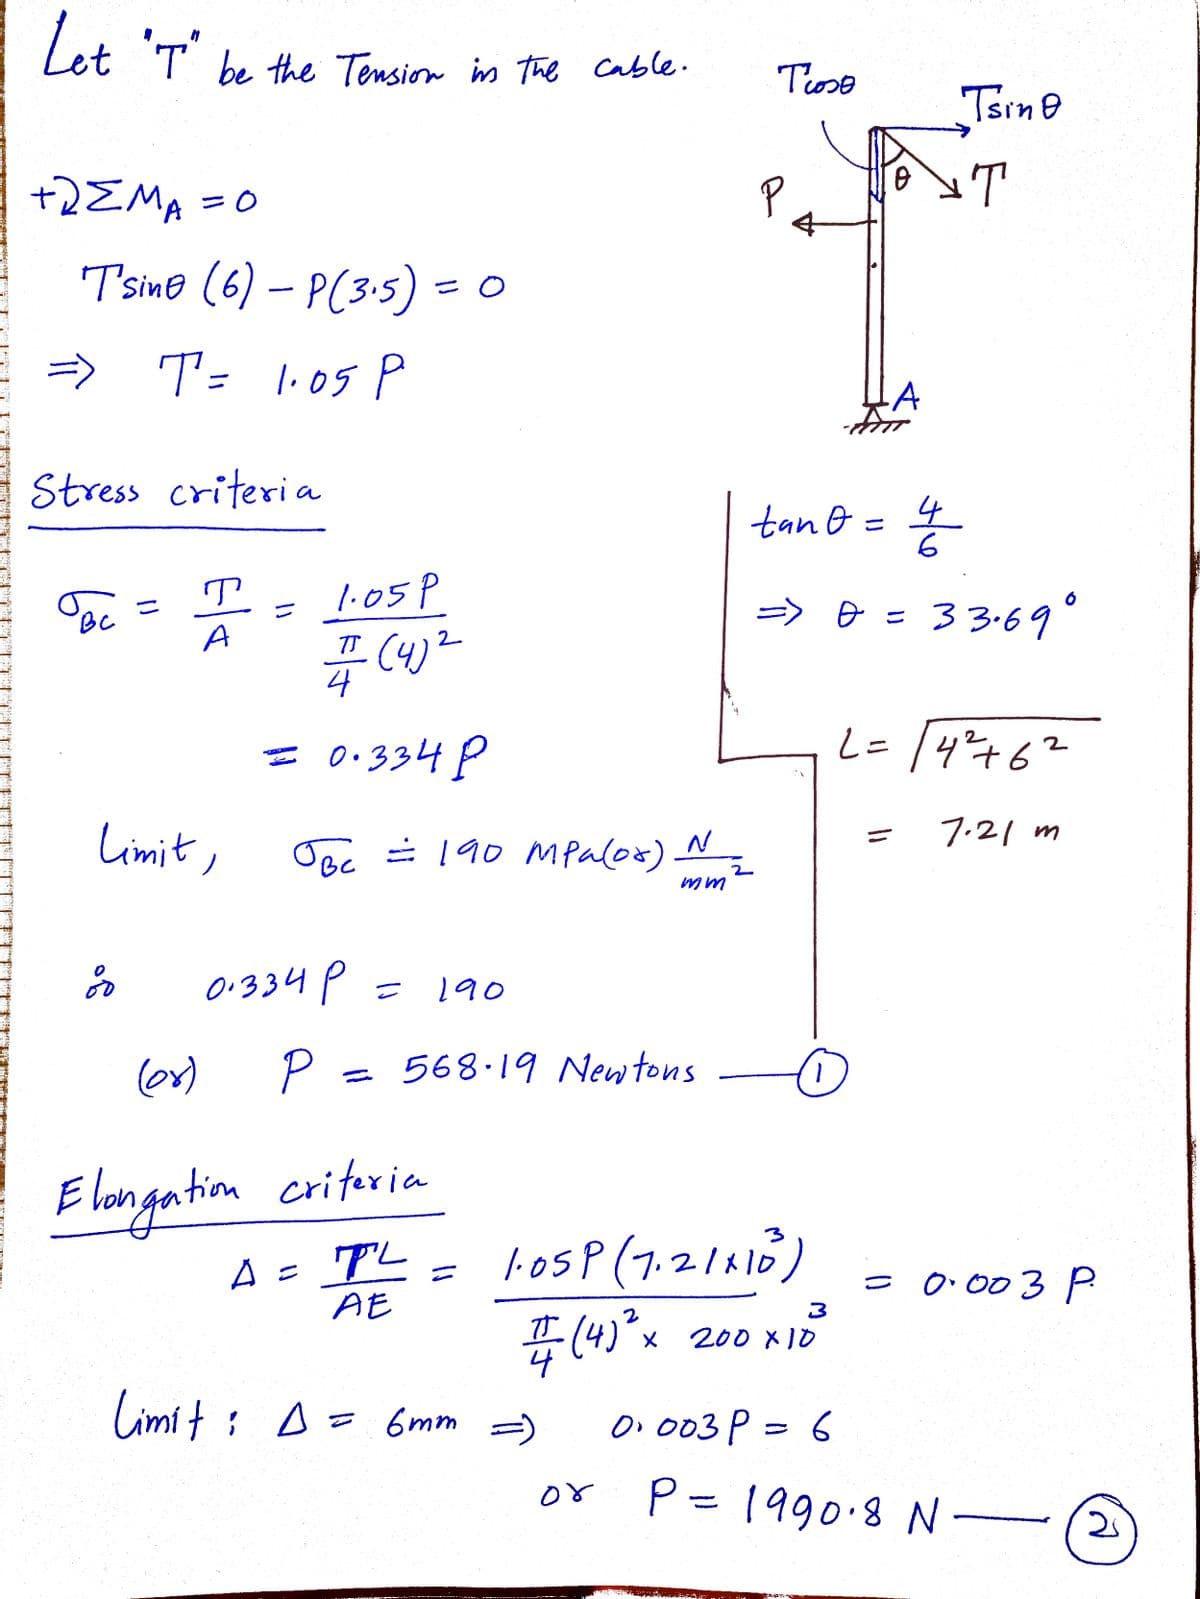 Let T be the Tension in The Cable.
Tioso
Tsine
+2EMA =0
T'
Tsino (6) – P(3:5) = 0
=>
T= l:05 P
A
Stress criteria
tano = Ź
4
1.05P
TT (4)'
4
=> e =
33.69°
Bc
A
= 0•334 P
L=14462
Limit,
Ooc = 190 Mpalox) N
7.21 m
2.
0:334P
190
P = 568.19 Newtons
E lon gation crifexia
3
A = TL
AE
l-o5P (7.21810)
= 0.003 P
(4) x
4
2
200 x10
Limi t : A = 6mm =)
O. 003 P = 6
P=1990.8 N-
%3D
